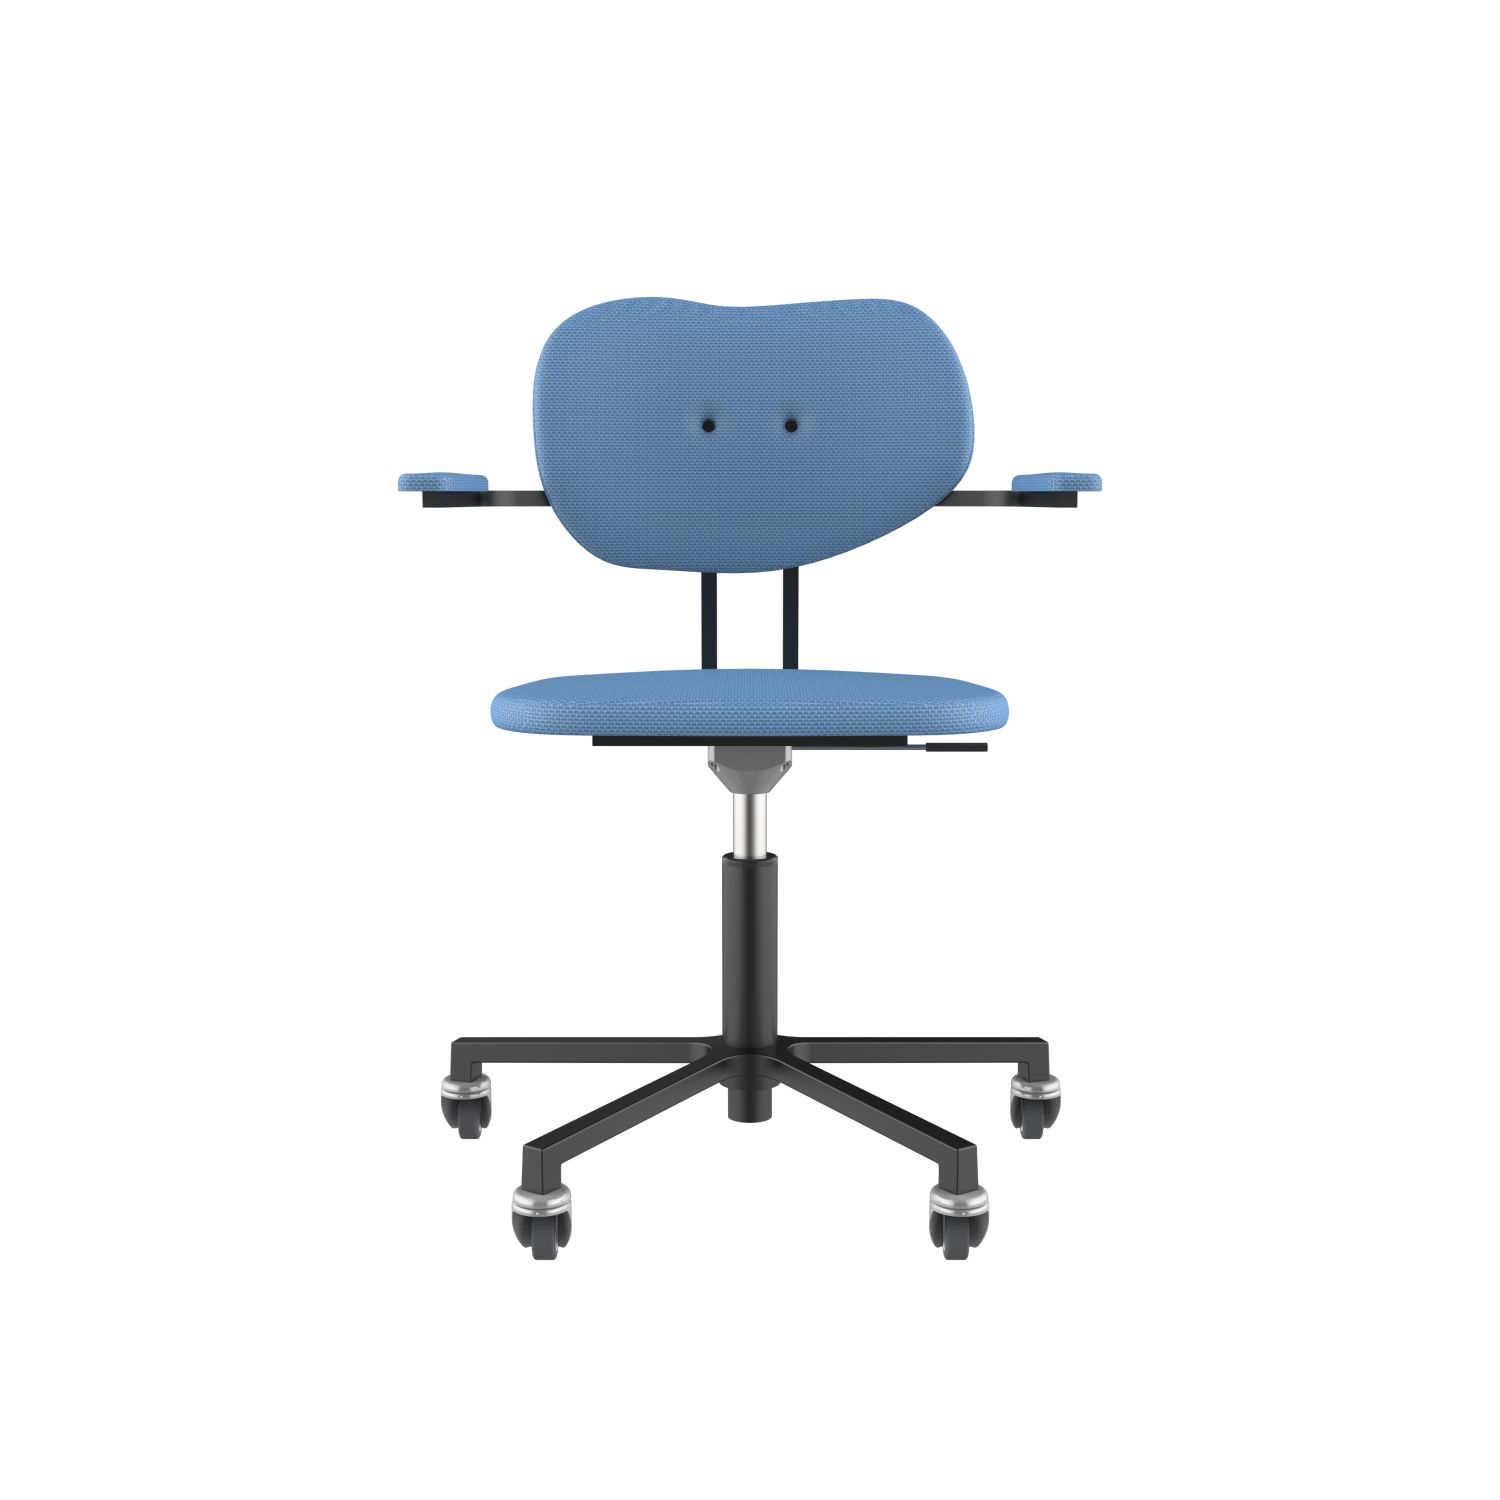 lensvelt maarten baas office chair with armrests backrest b blue horizon 040 black ral9005 soft wheels